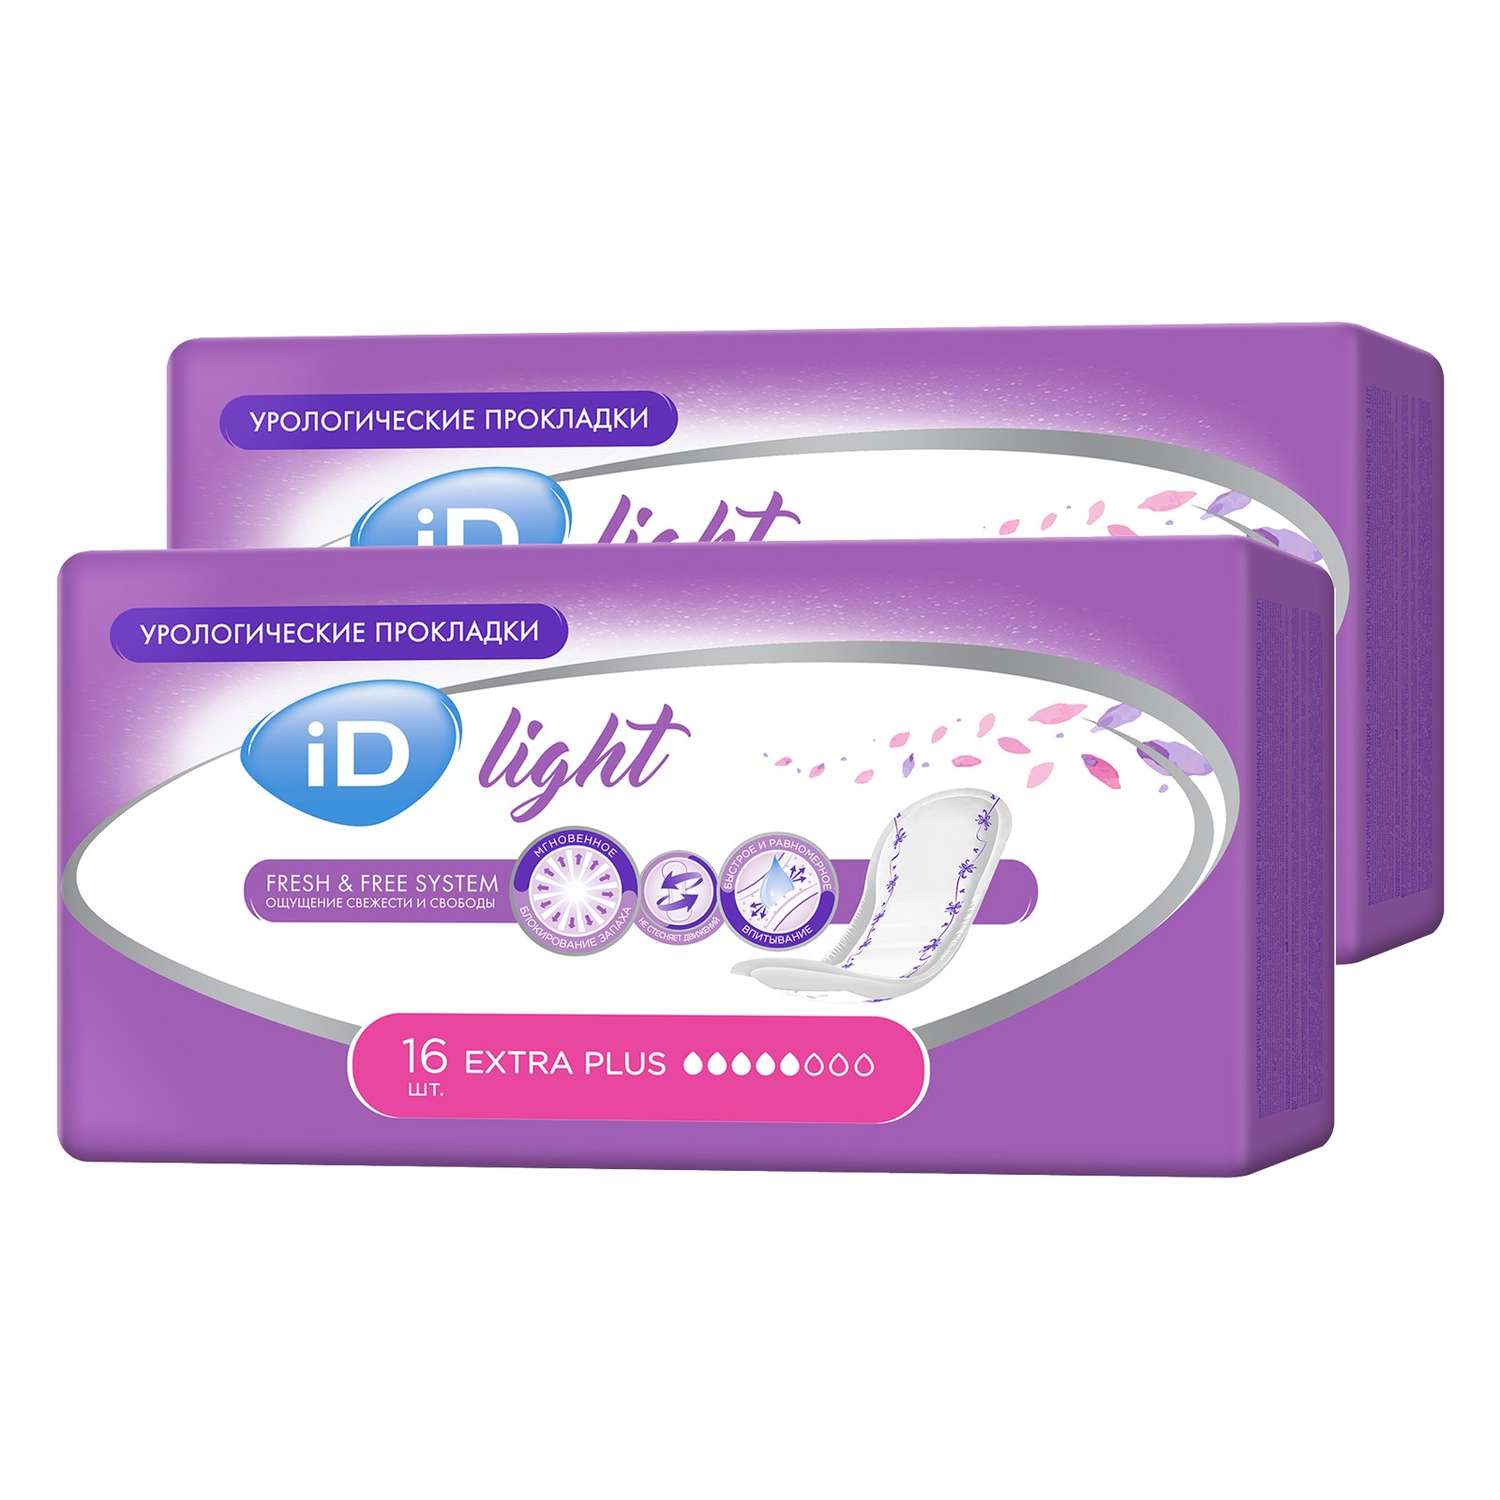 Прокладки урологические iD LIGHT Extra plus 16 шт. х2 упаковки - фото 2